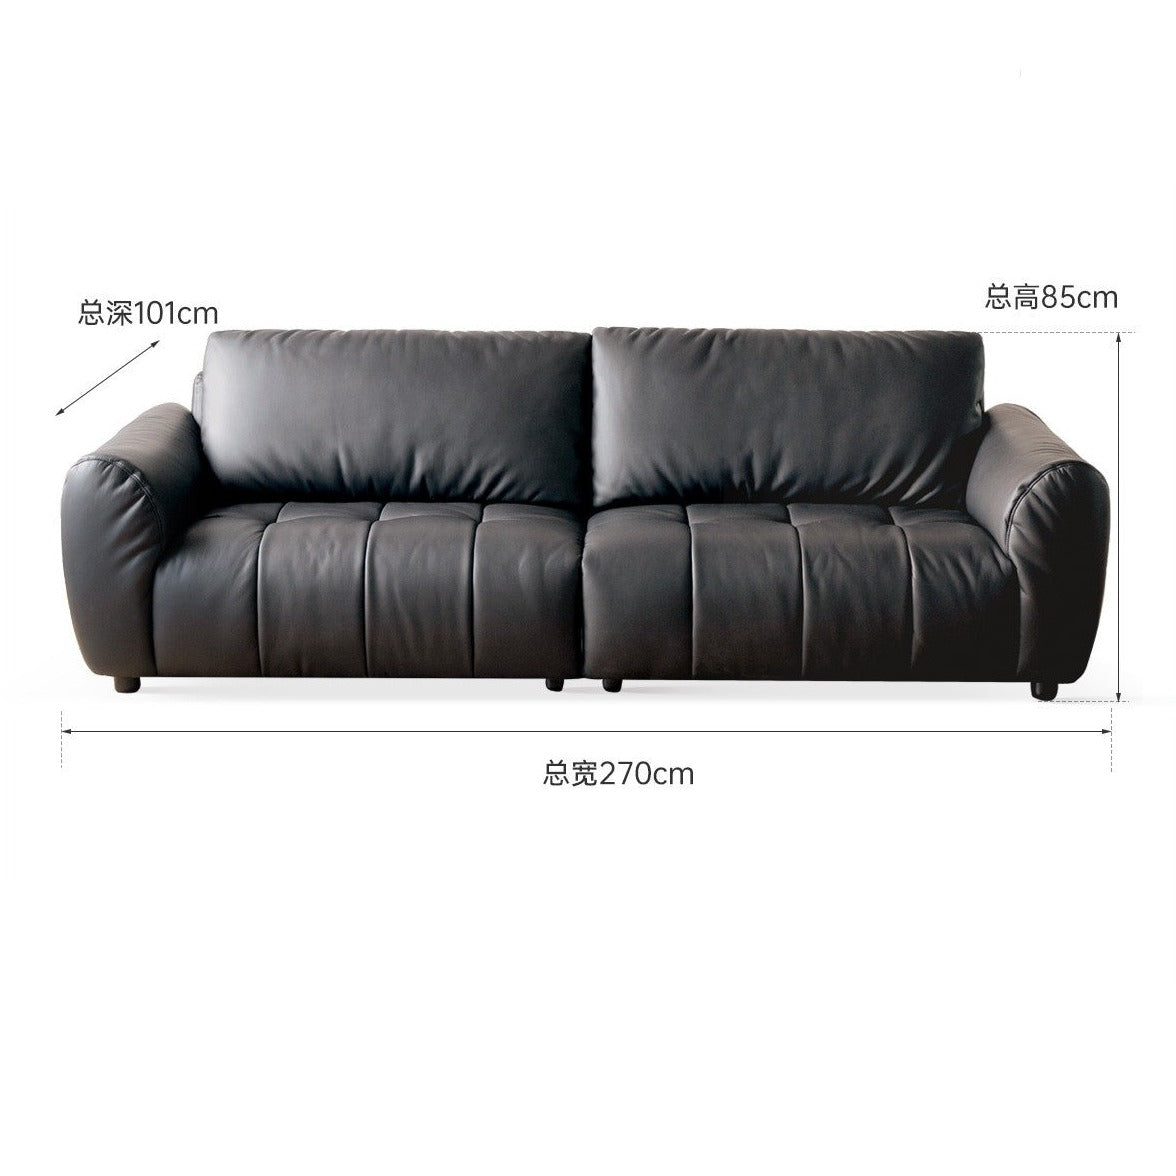 Eco-friendly synthetic leather, art Italian minimalist black sofa)